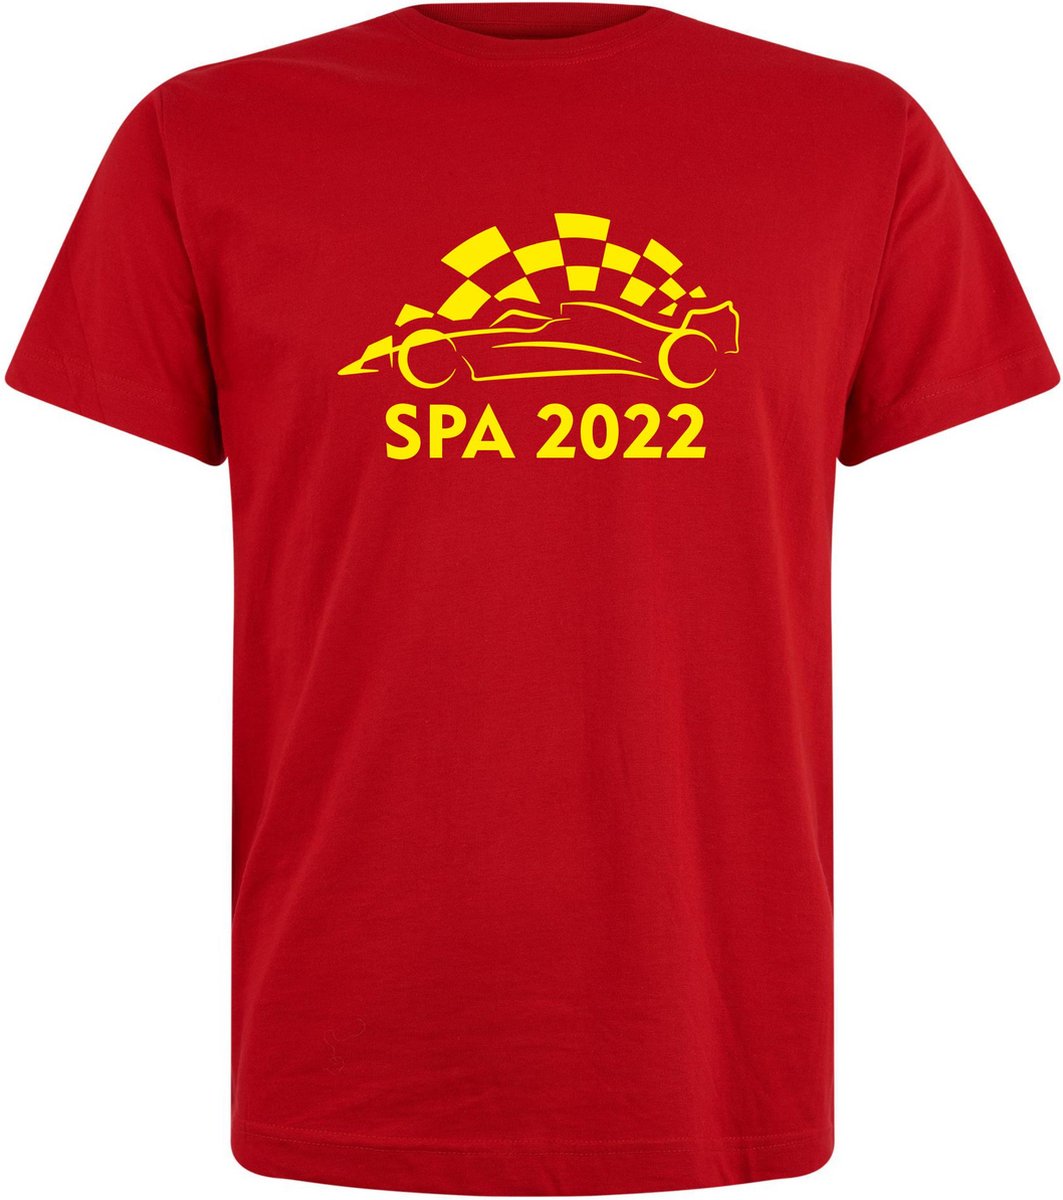 T-shirt kinderen Spa 2022 met raceauto | Max Verstappen / Red Bull Racing / Formule 1 fan | Grand Prix Circuit Spa-Francorchamps | kleding shirt | Rood | maat 104